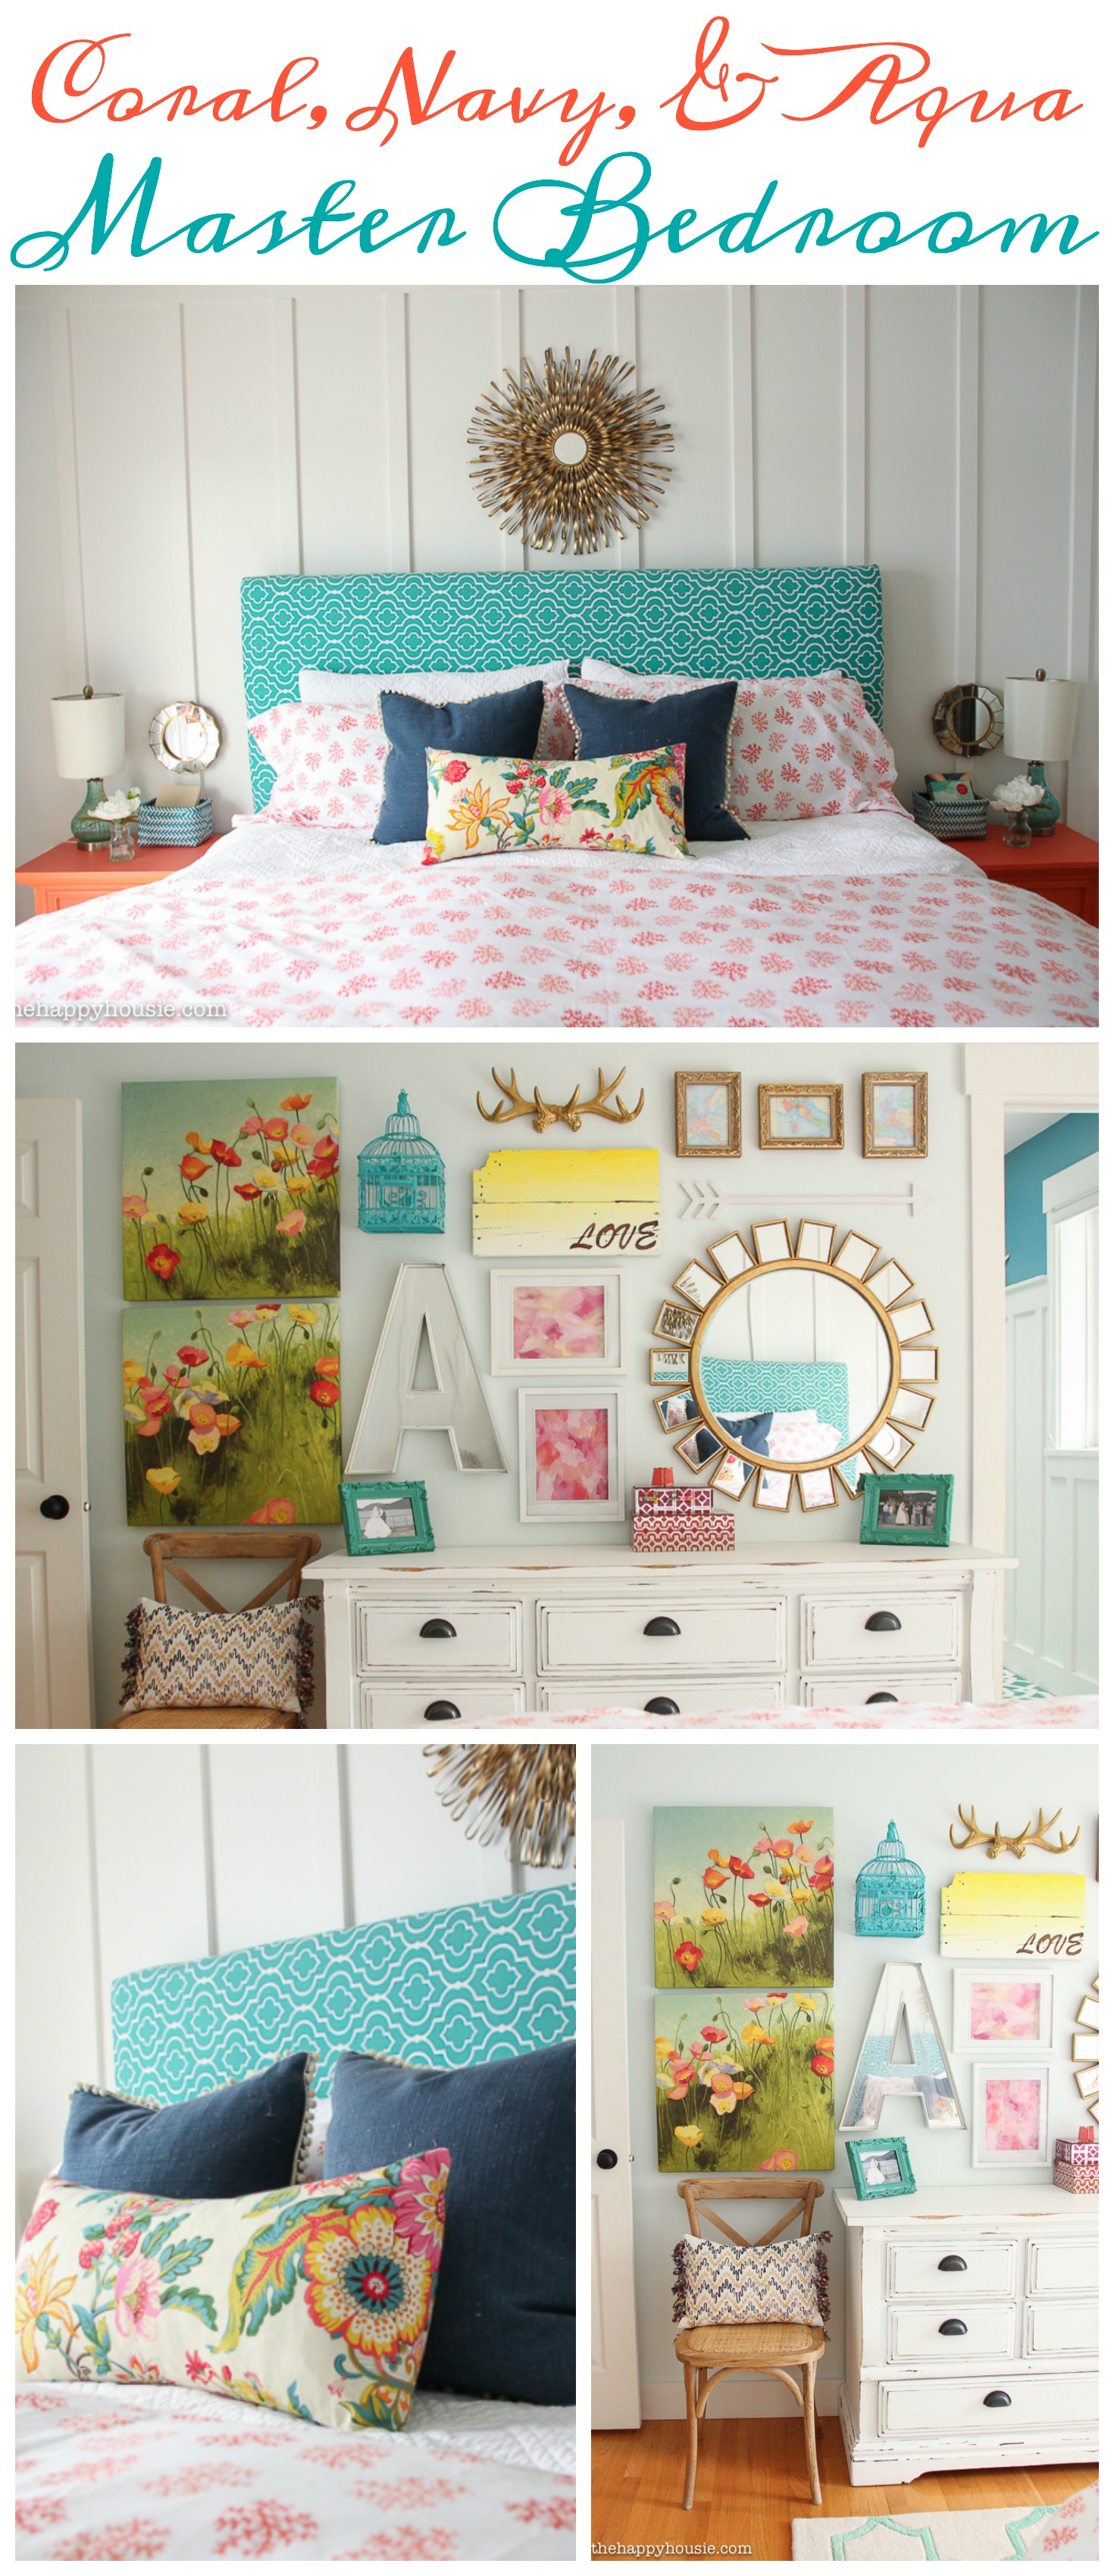 Coral, navy and aqua Master bedroom poster.